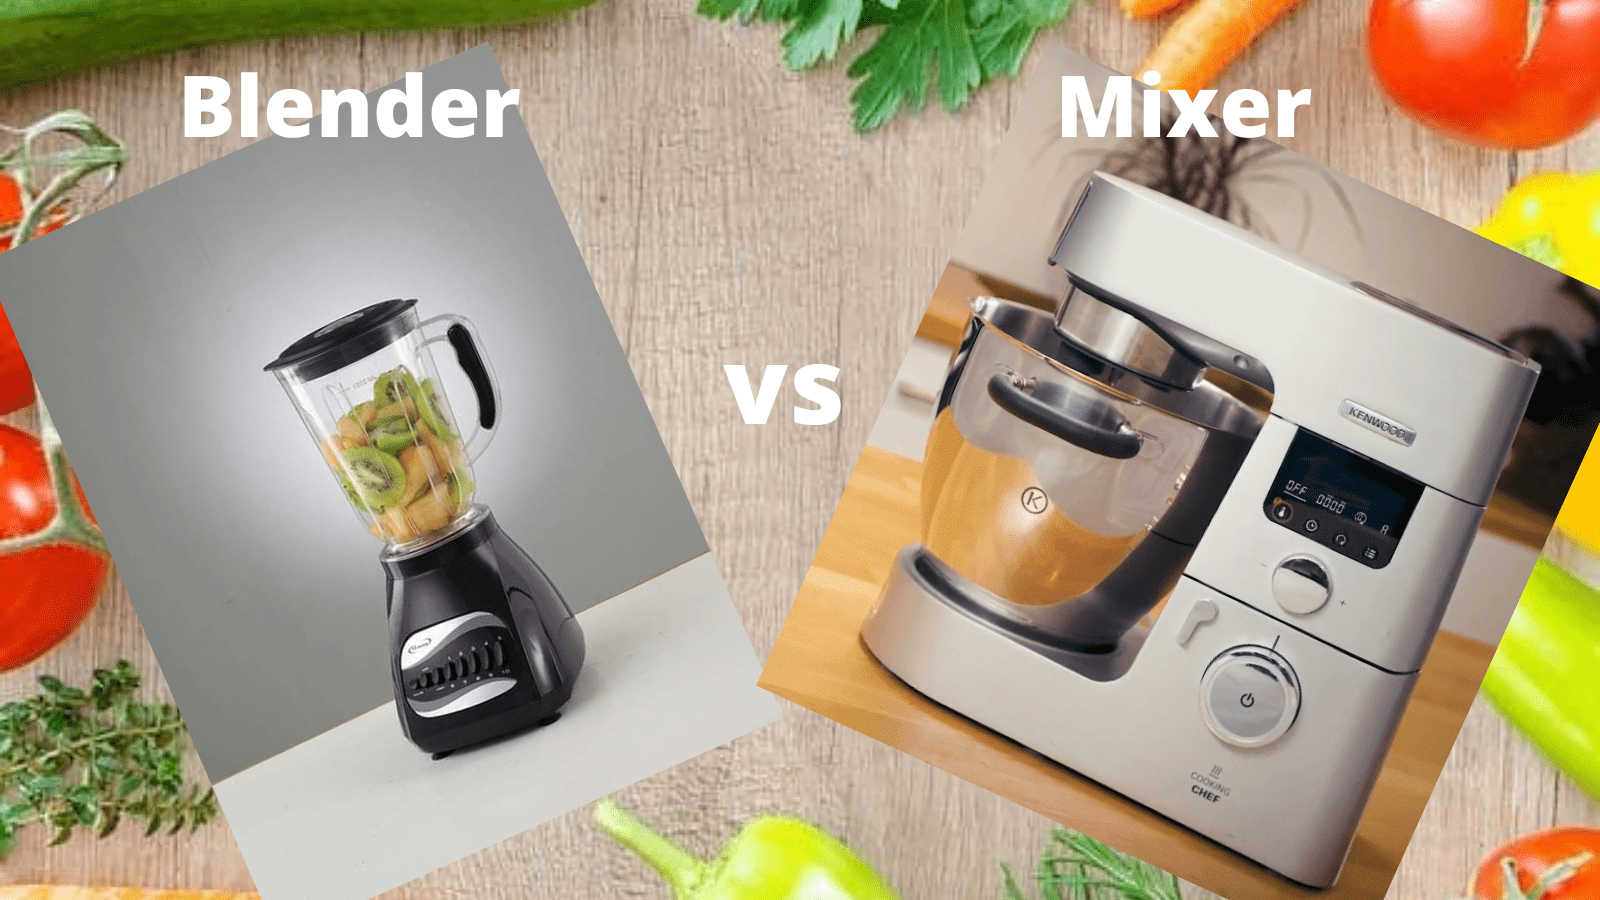 Blender vs mixer